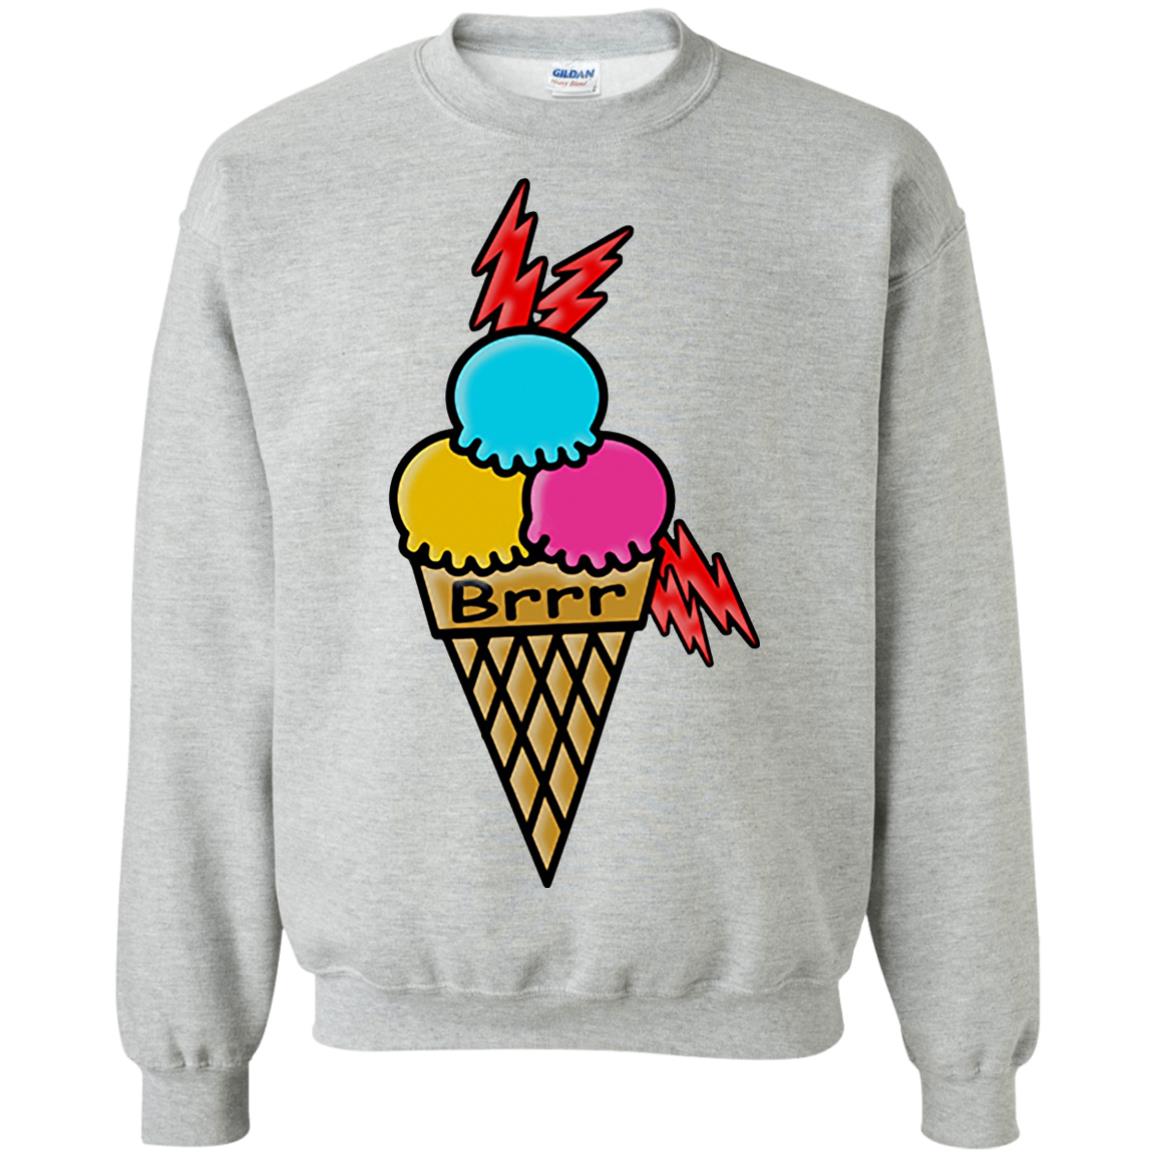 gucci mane ice cream sweatshirt - sport grey